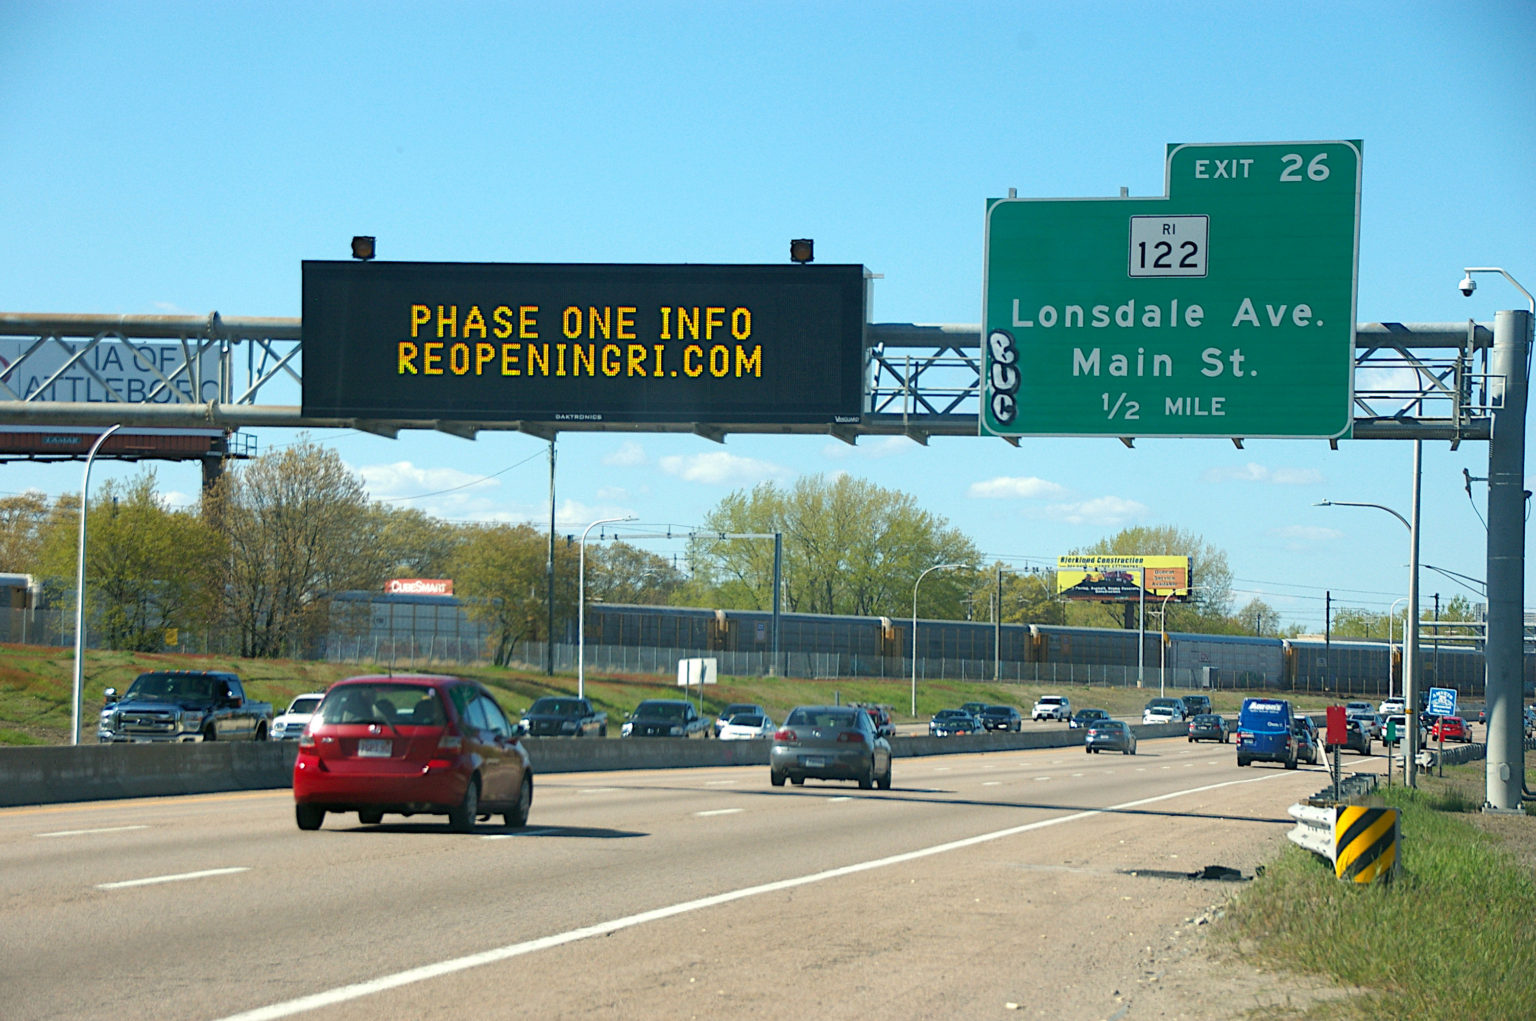 “Phase One info ReopeningRI.com” highway sign, I-95 northbound;